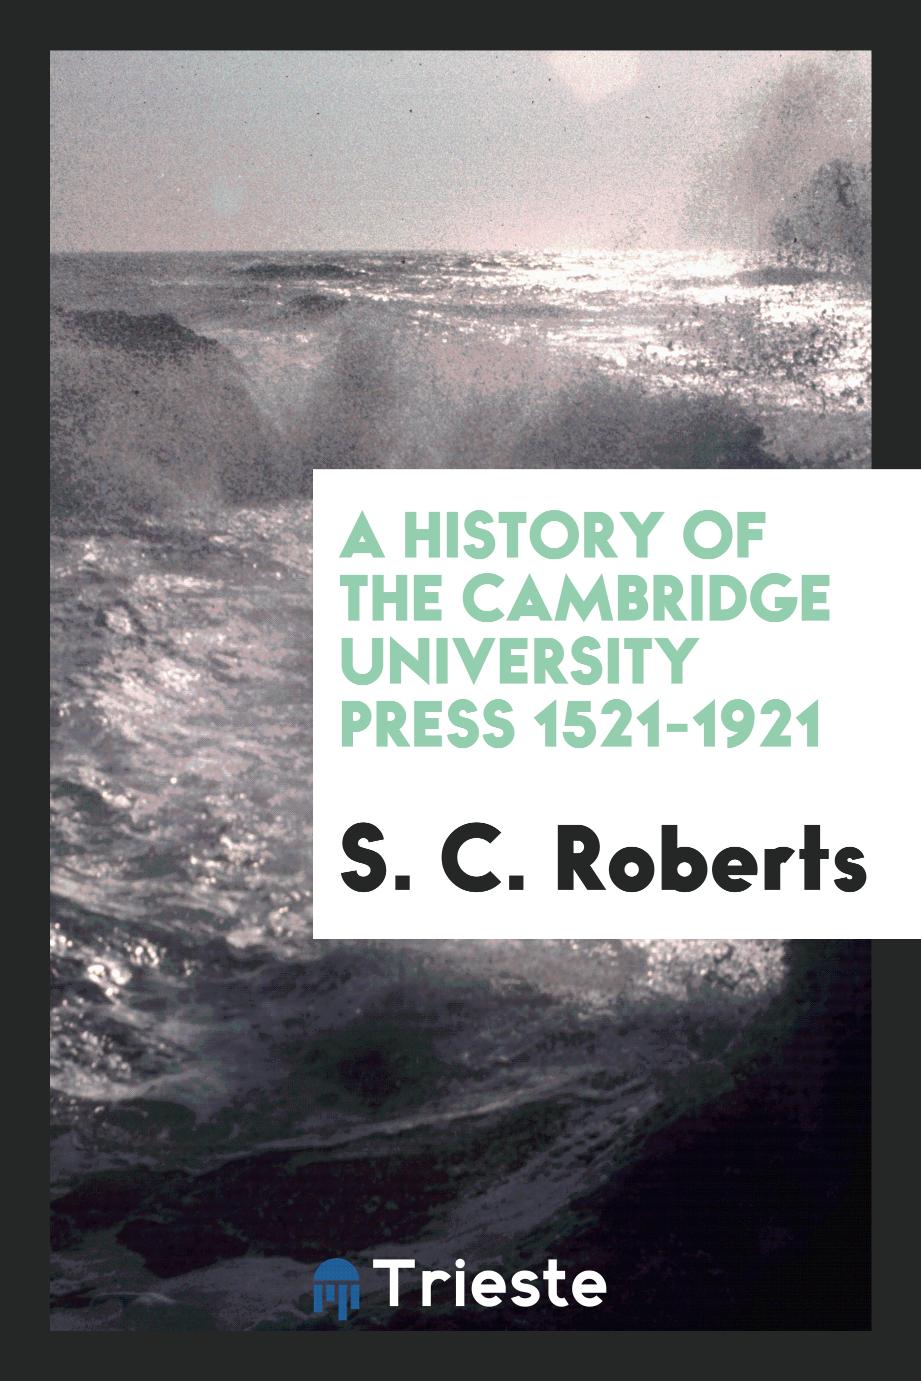 A history of the Cambridge university press 1521-1921